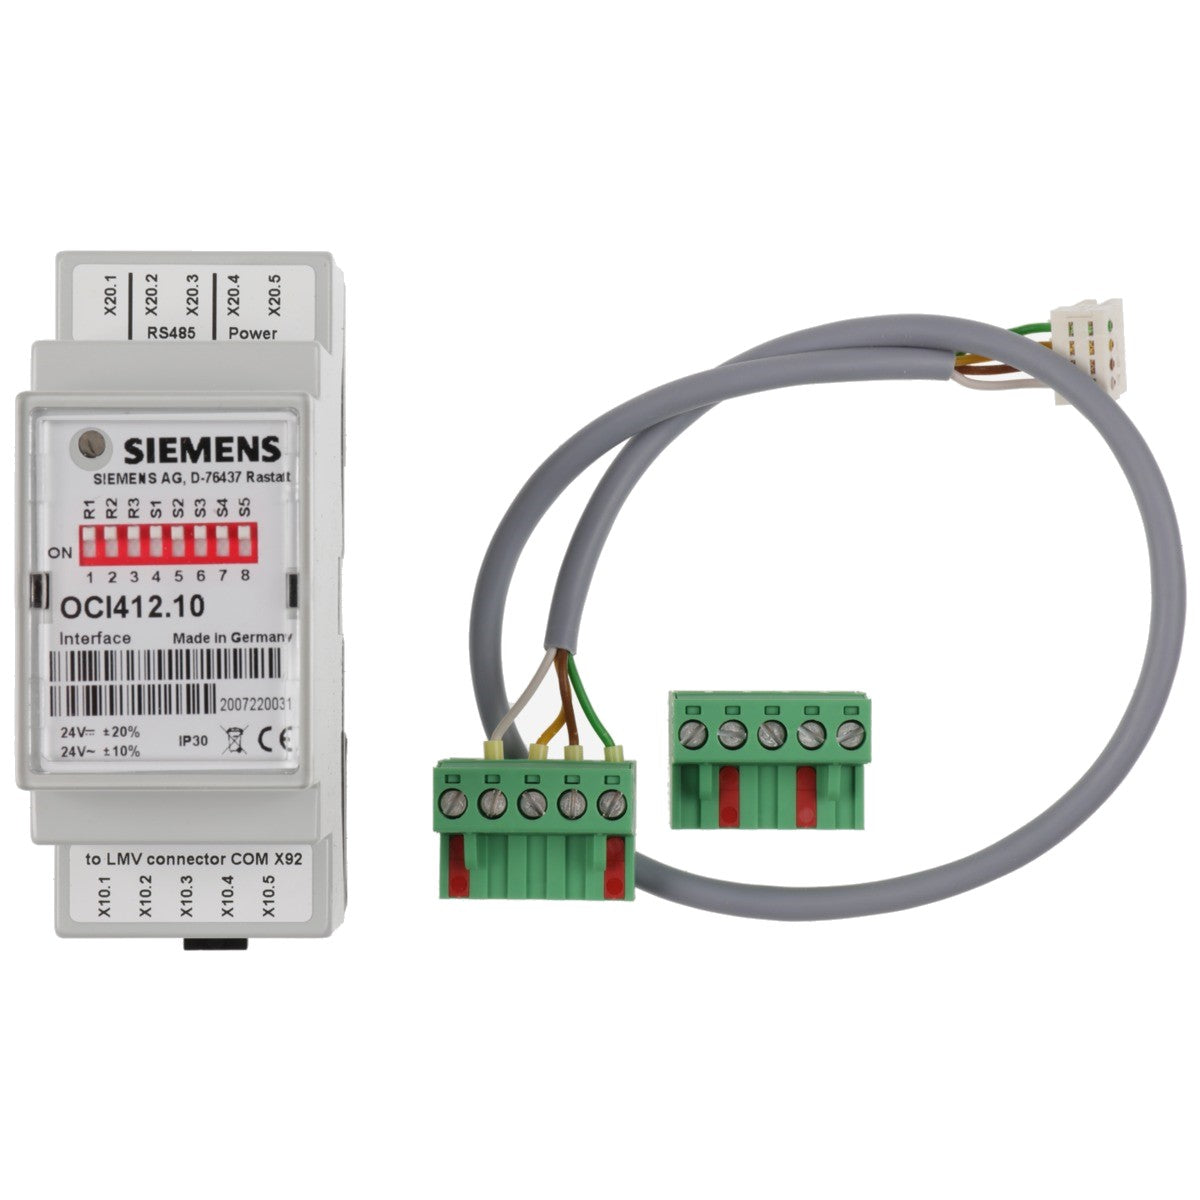 Siemens OCI412.10 Modbus Interface